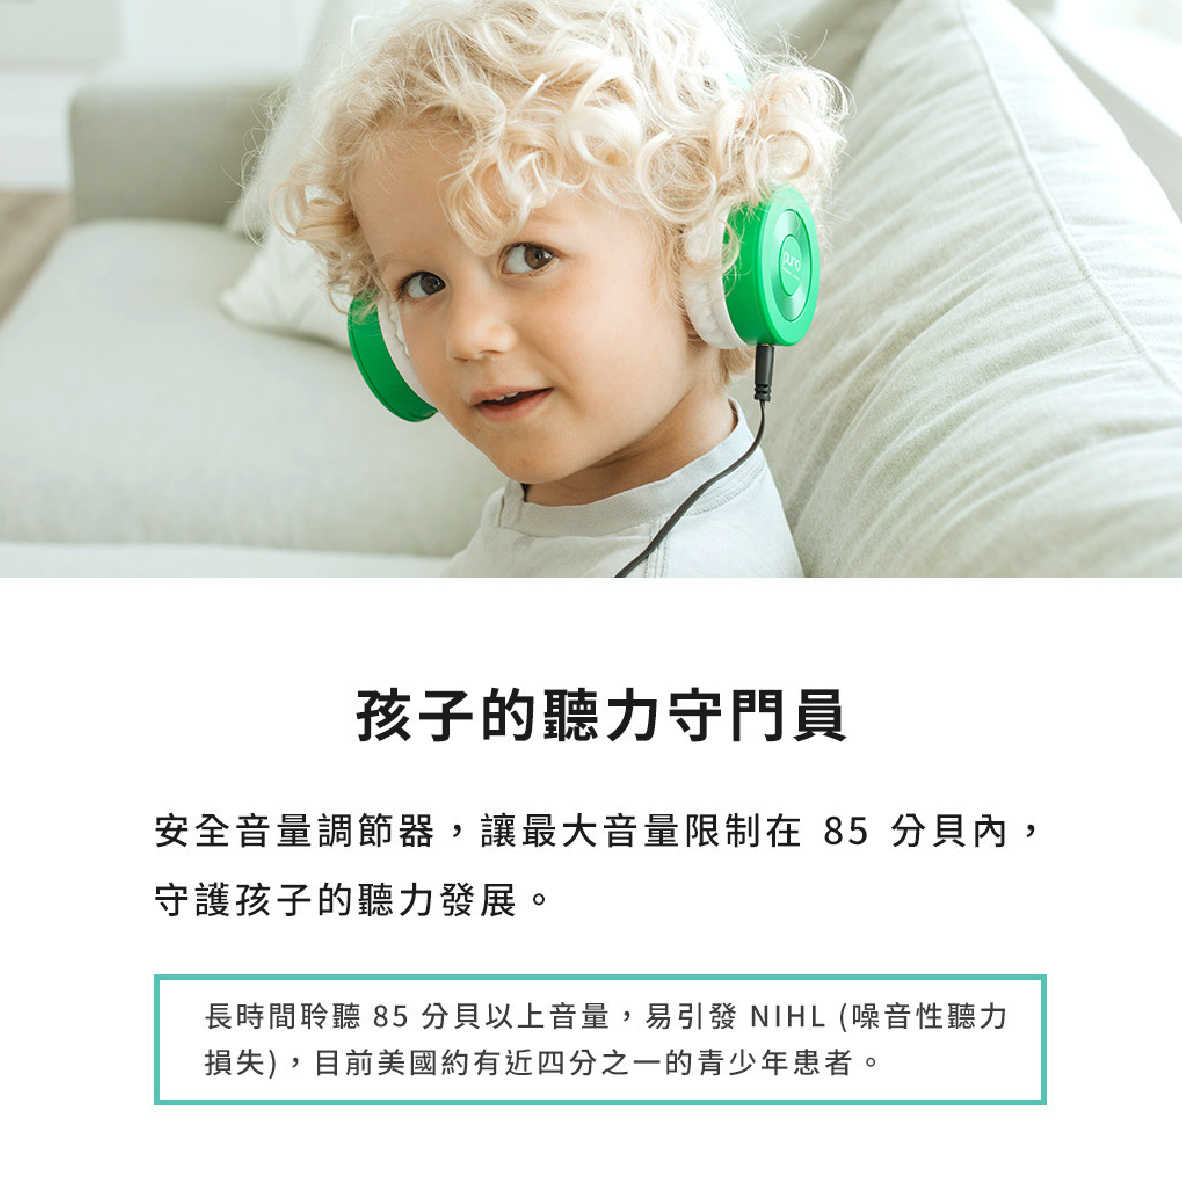 Puro JuniorJams 兒童耳機 安全音量 內建麥克風 耳罩式耳機 | My Ear 耳機專門店